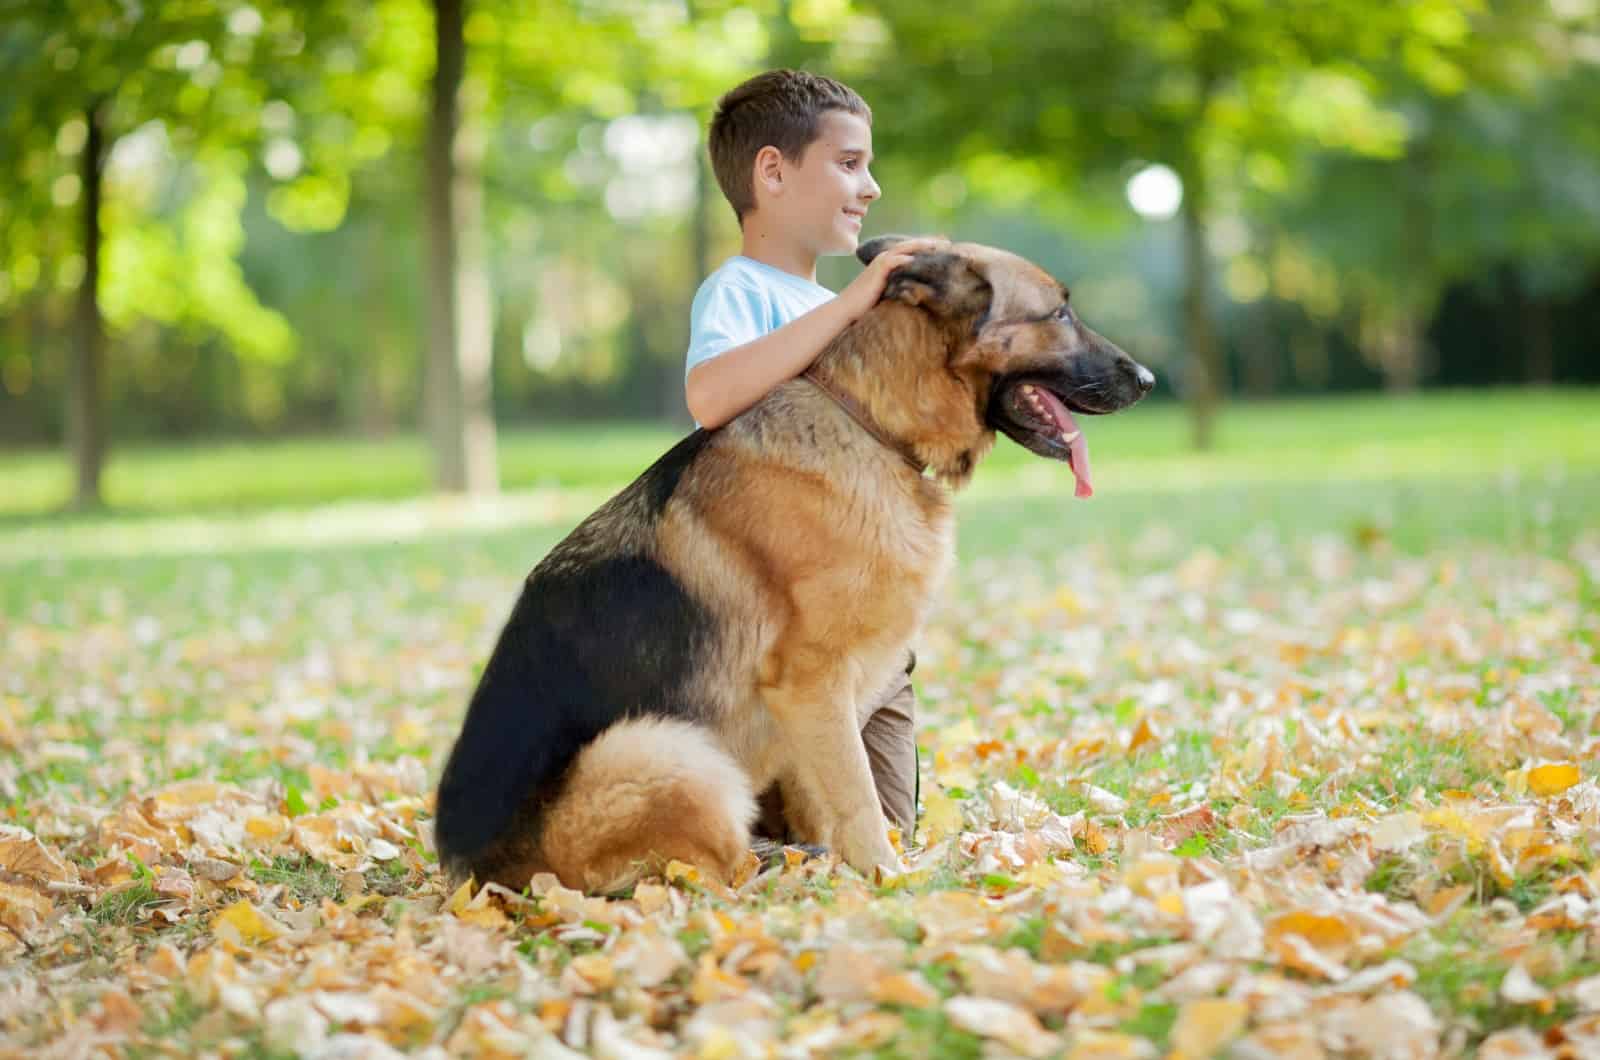 German Shepherd sitting by boy in park